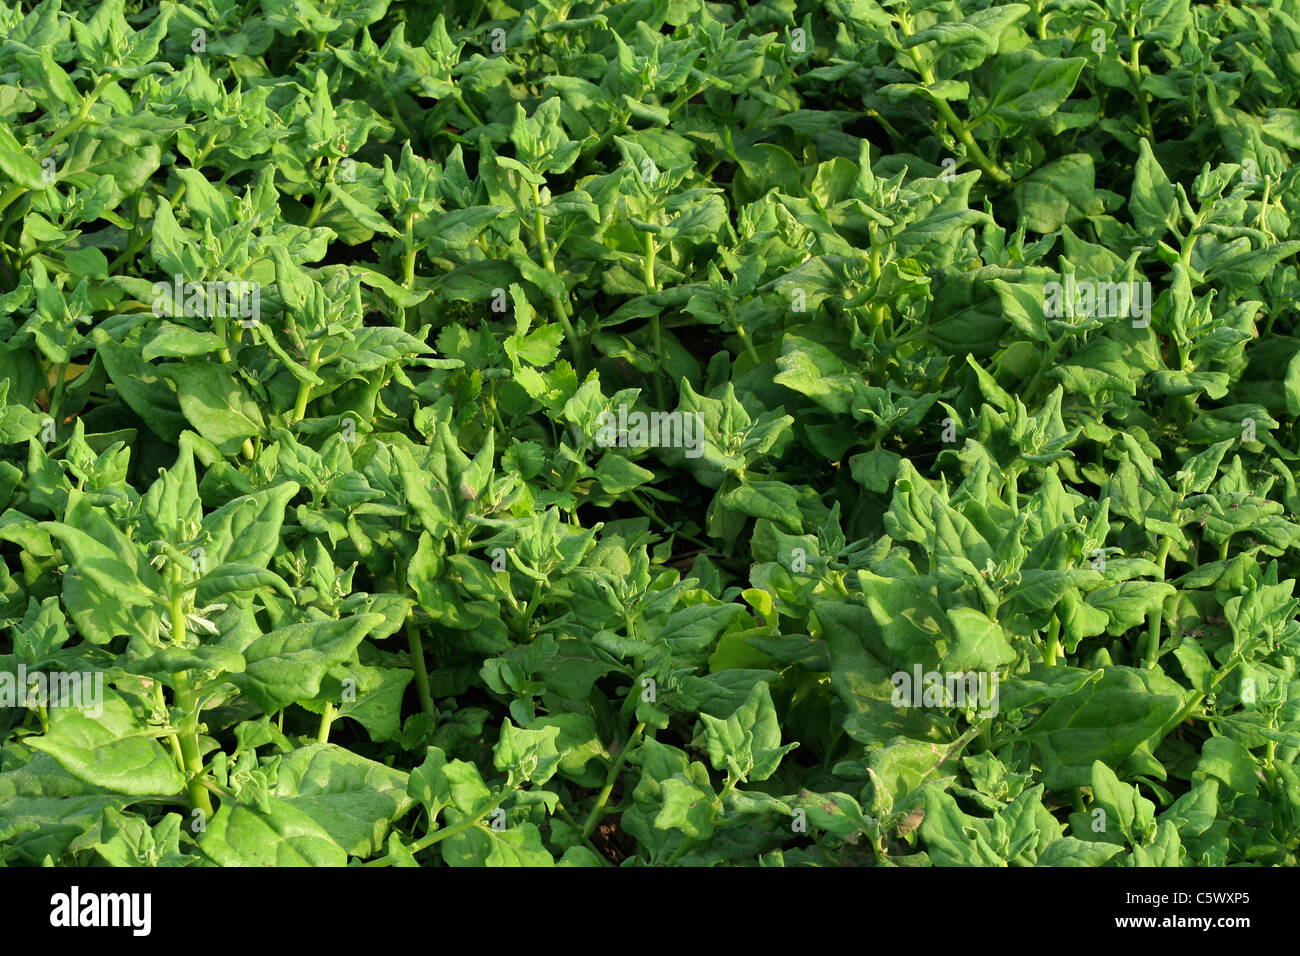 Vegetable bed : New Zealand spinach (Tetragonia tetragonioides). Stock Photo